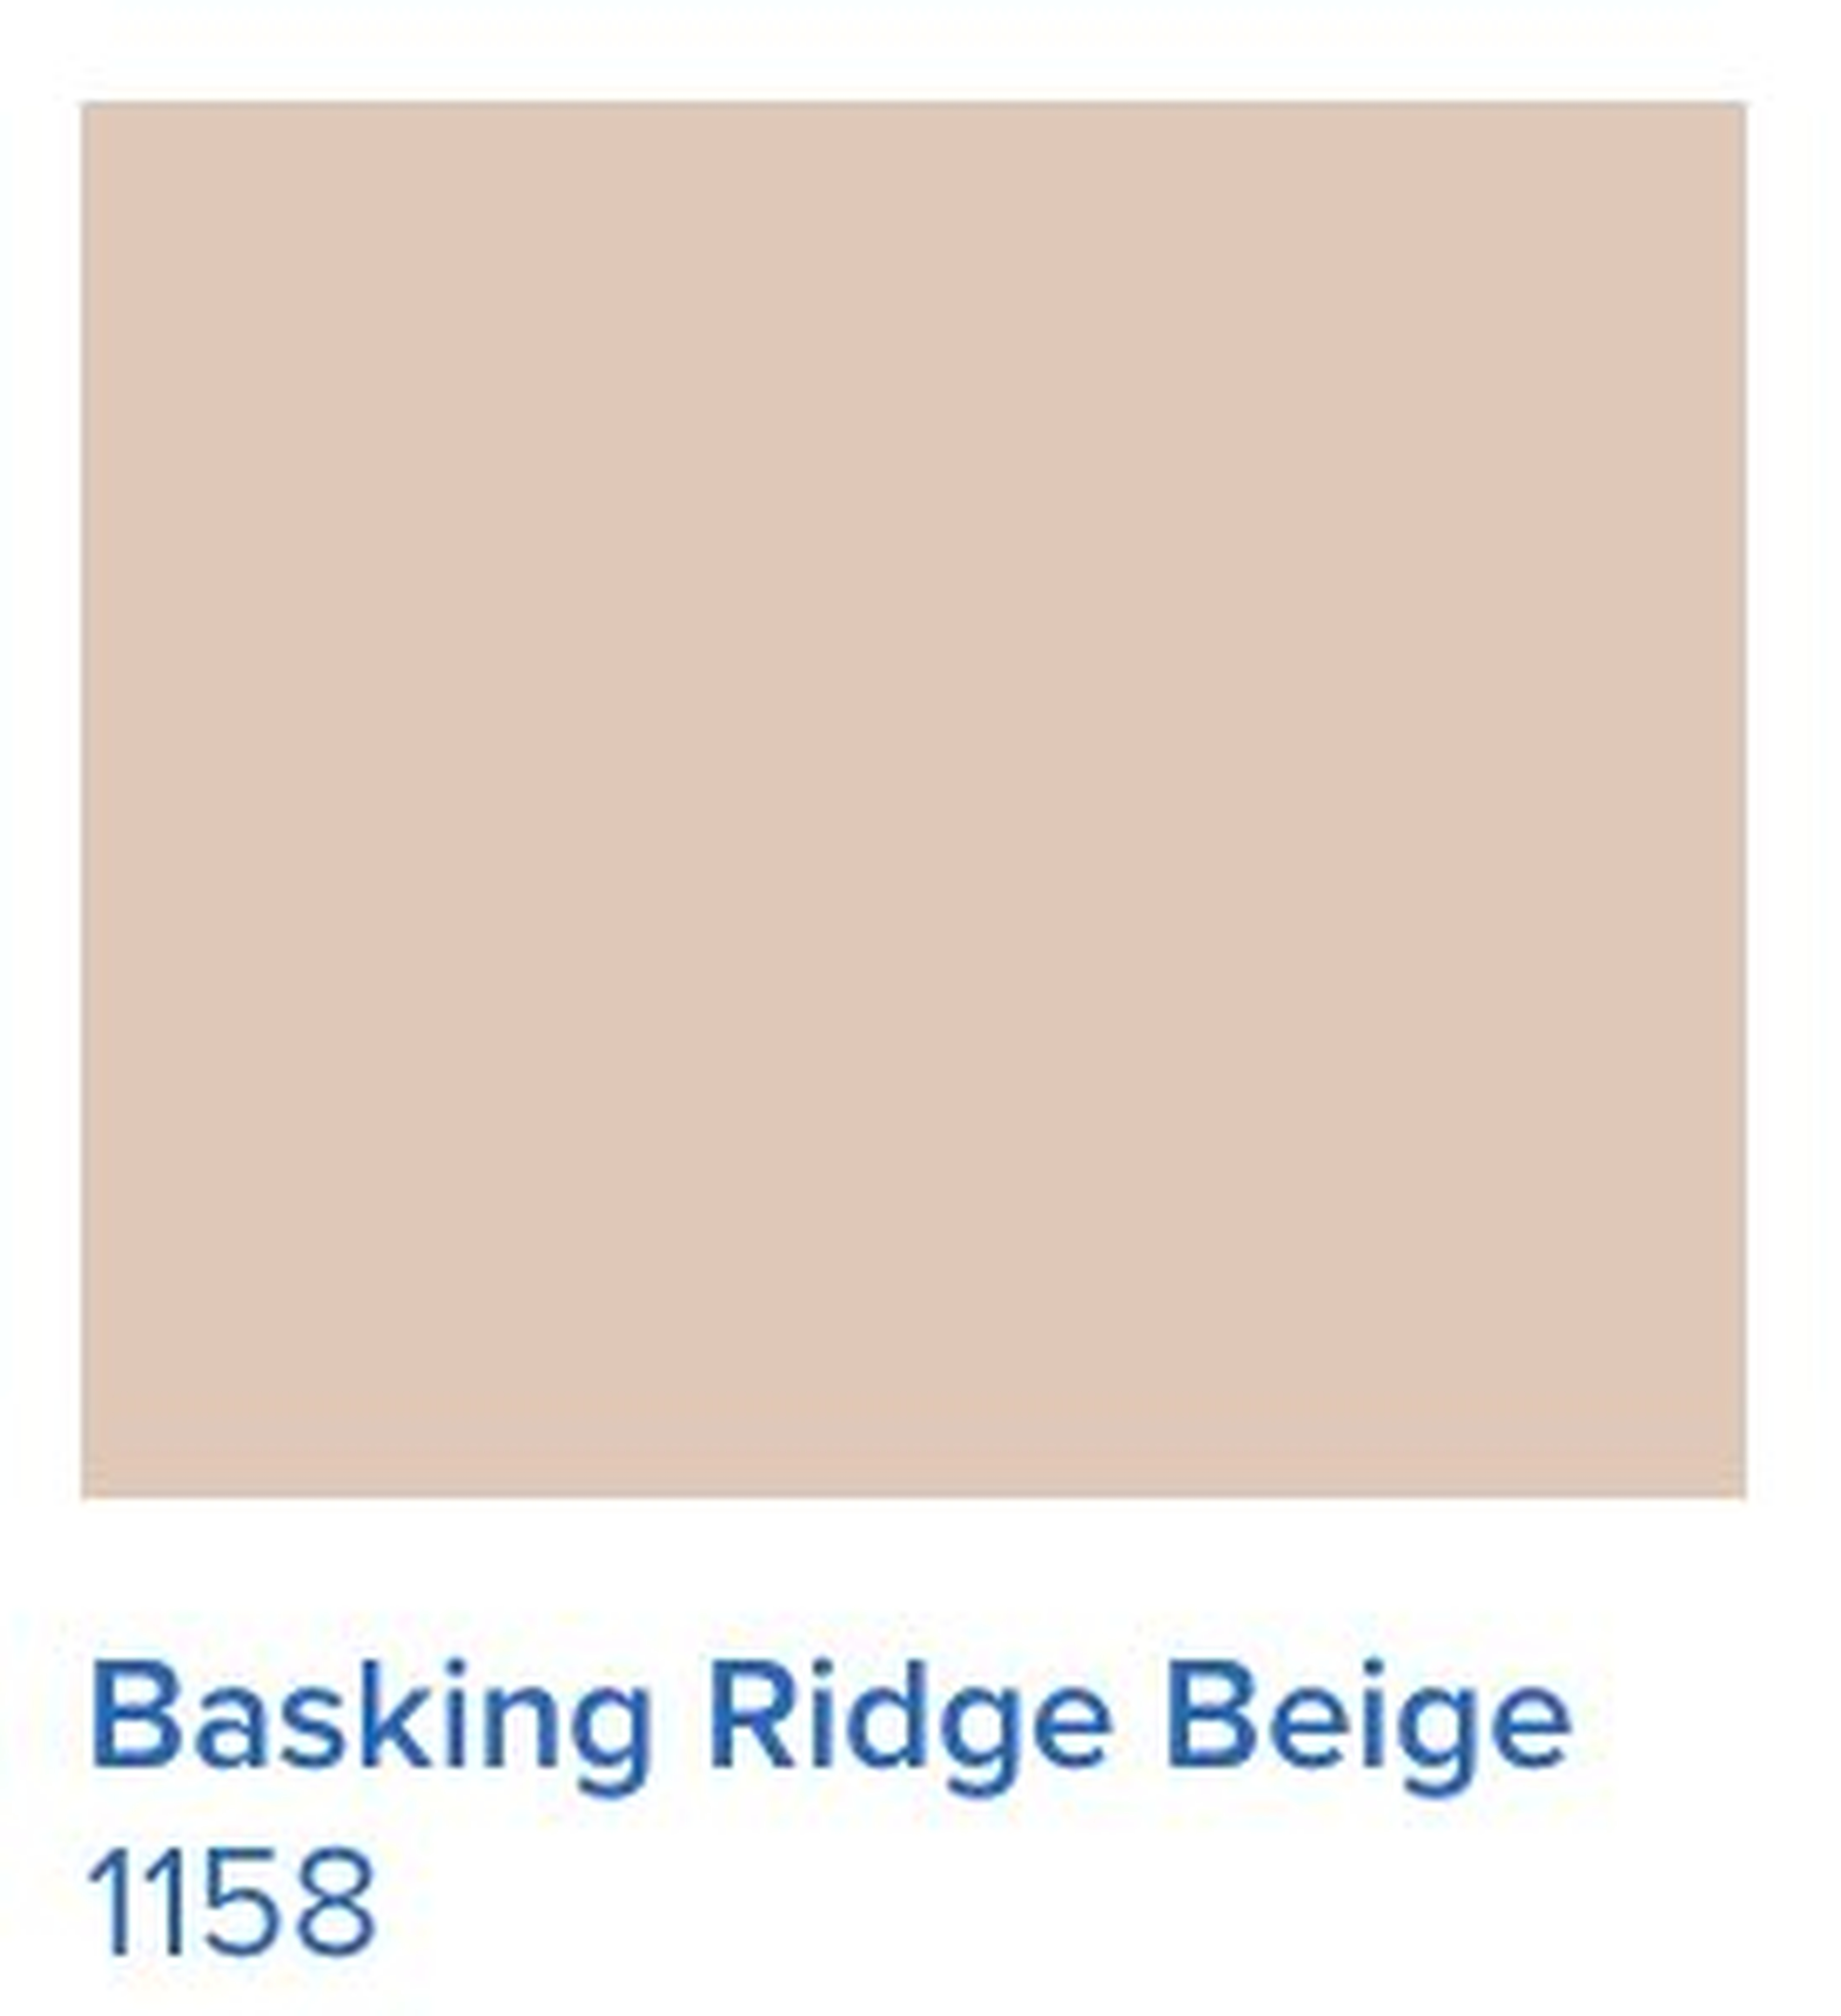 Ben® Waterborne Interior Paint - Eggshell Gallon Basking Ridge Beige 1158 - Benjamin Moore